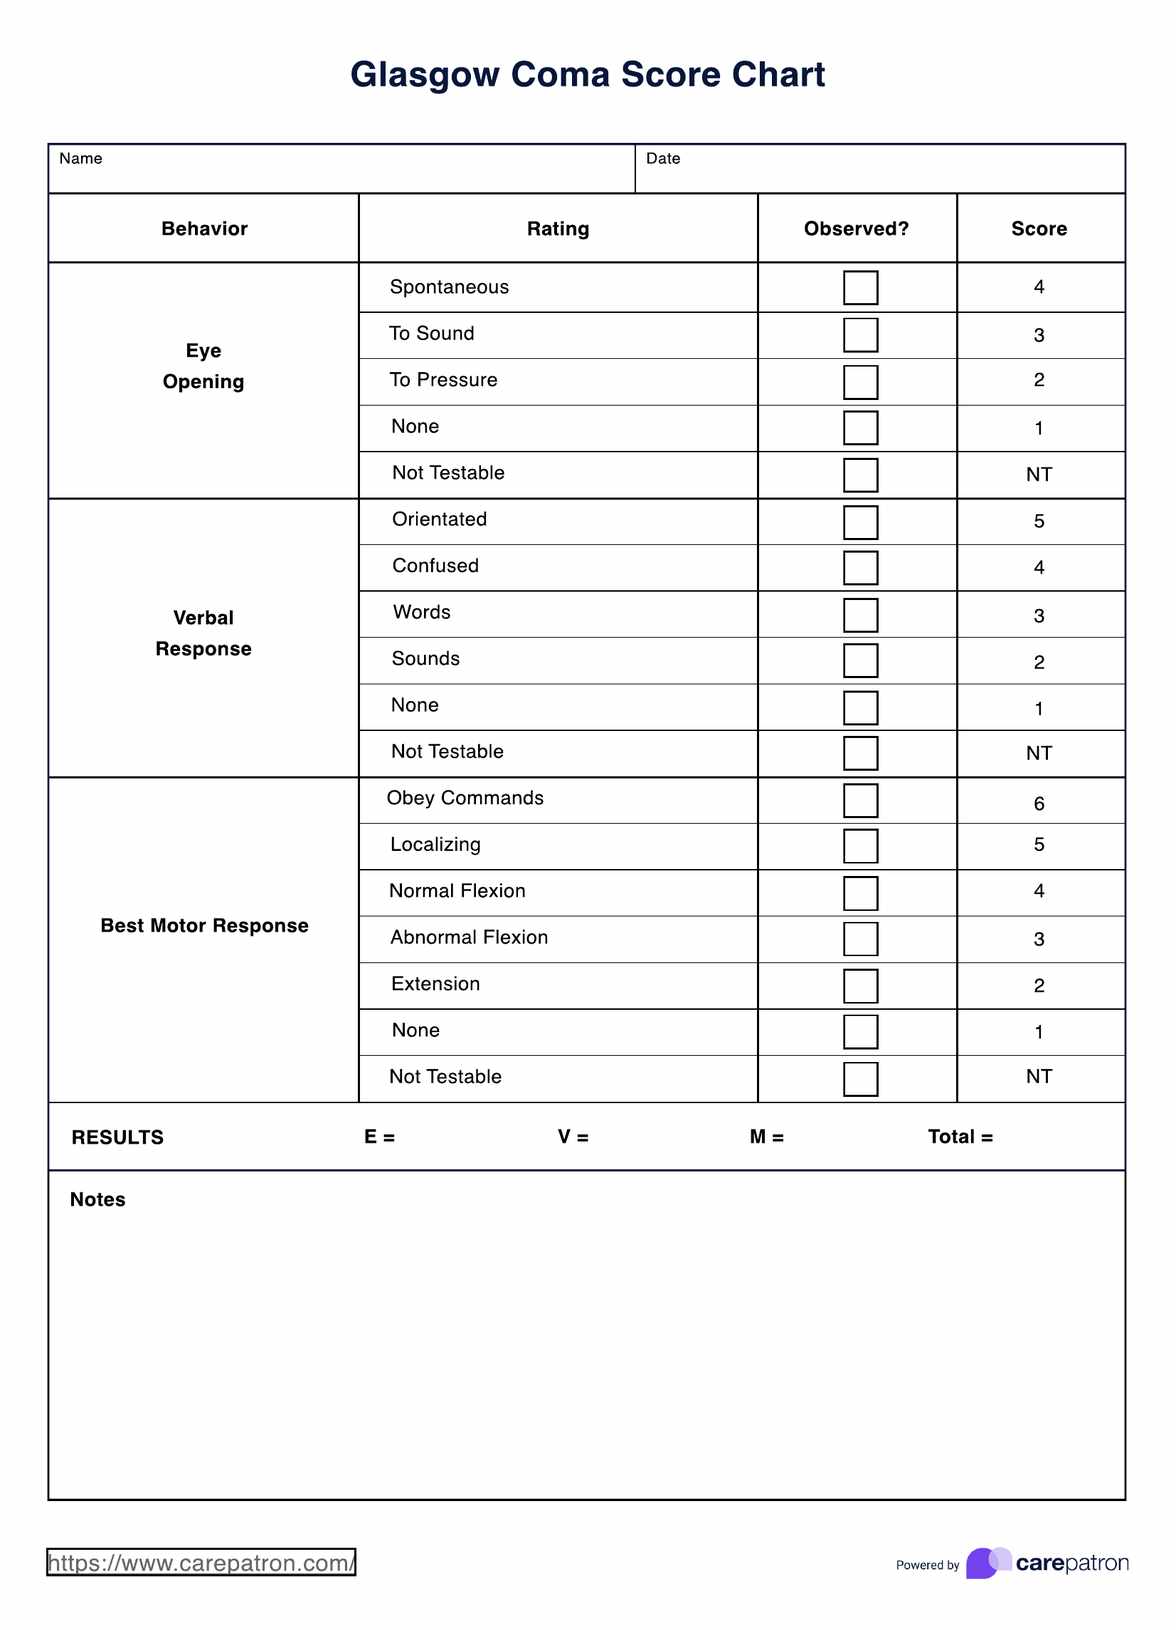 Glasgow Coma Scale Score Chart PDF Example